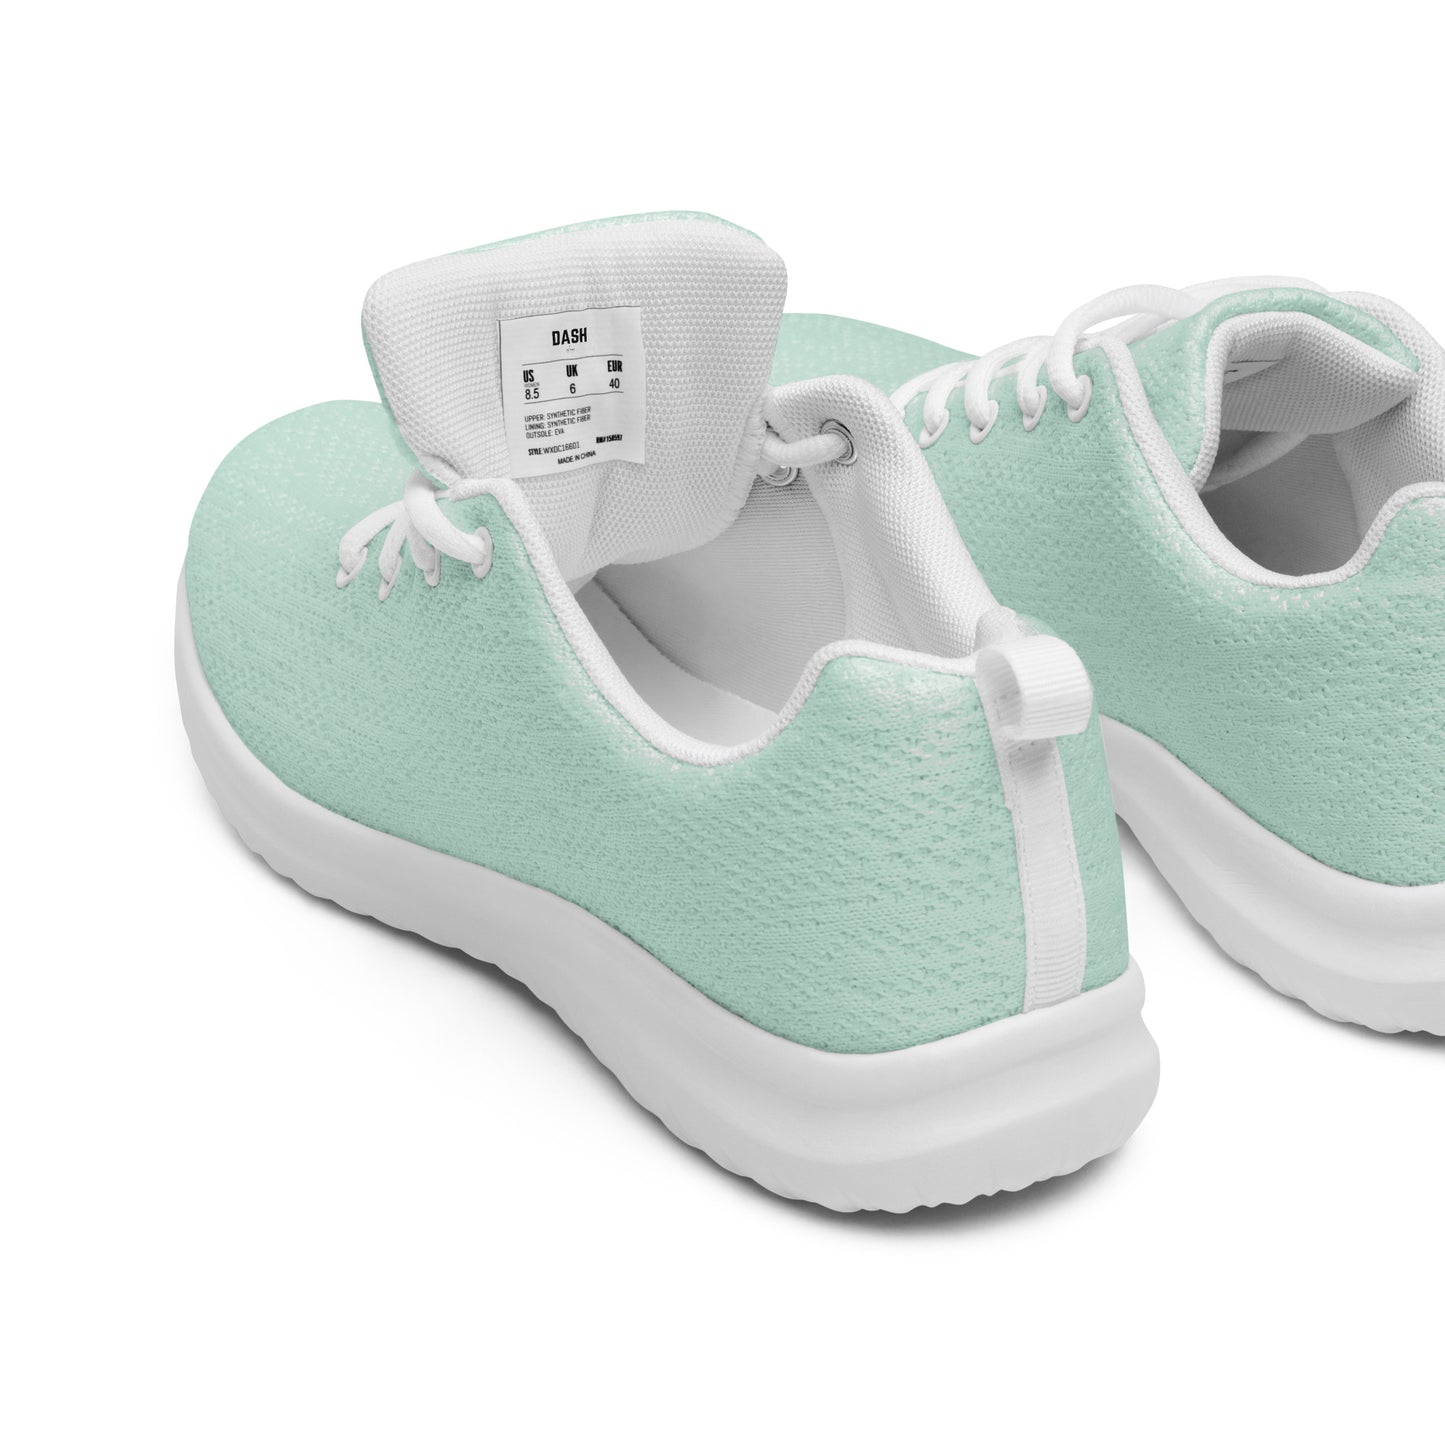 DASH Mint Women’s Athletic Shoes Lightweight Breathable Design by IOBI Original Apparel